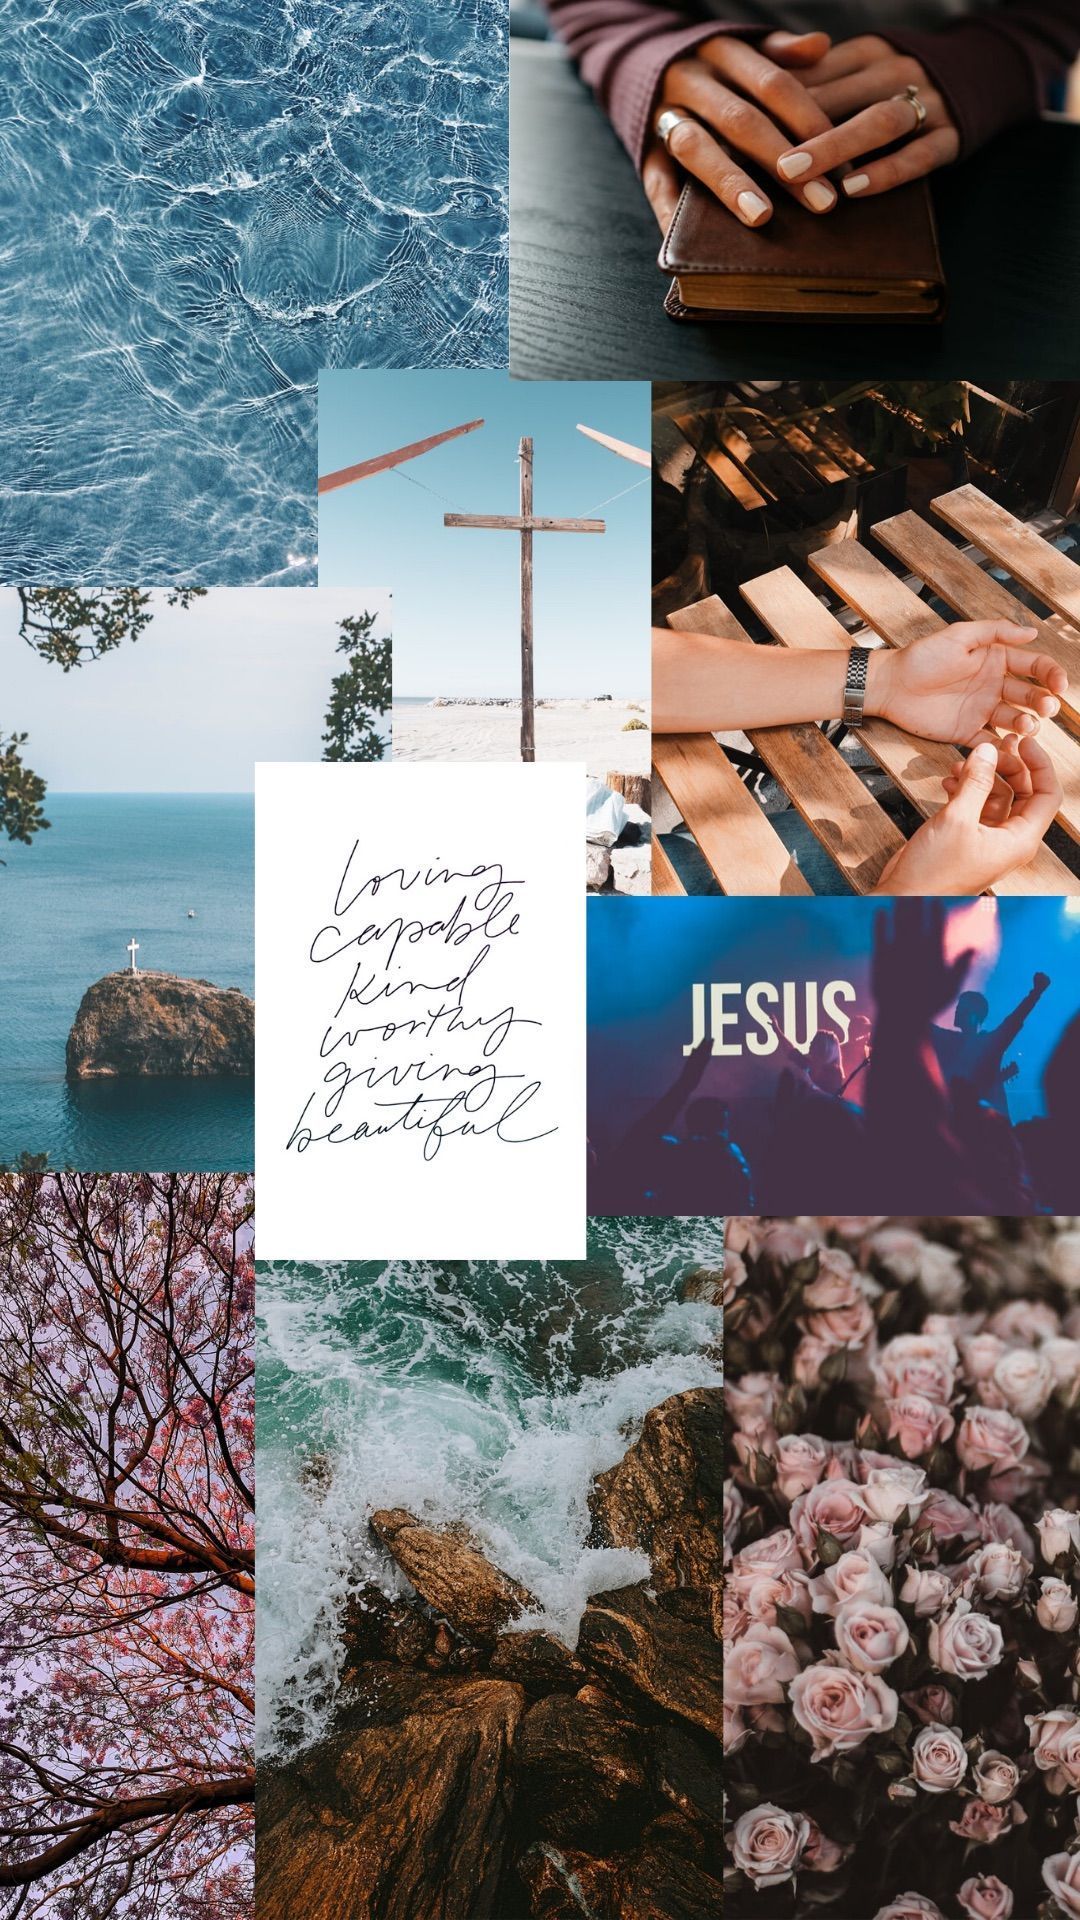 Jesus ❤️. Jesus wallpaper, Christian wallpaper, Christian iphone wallpaper